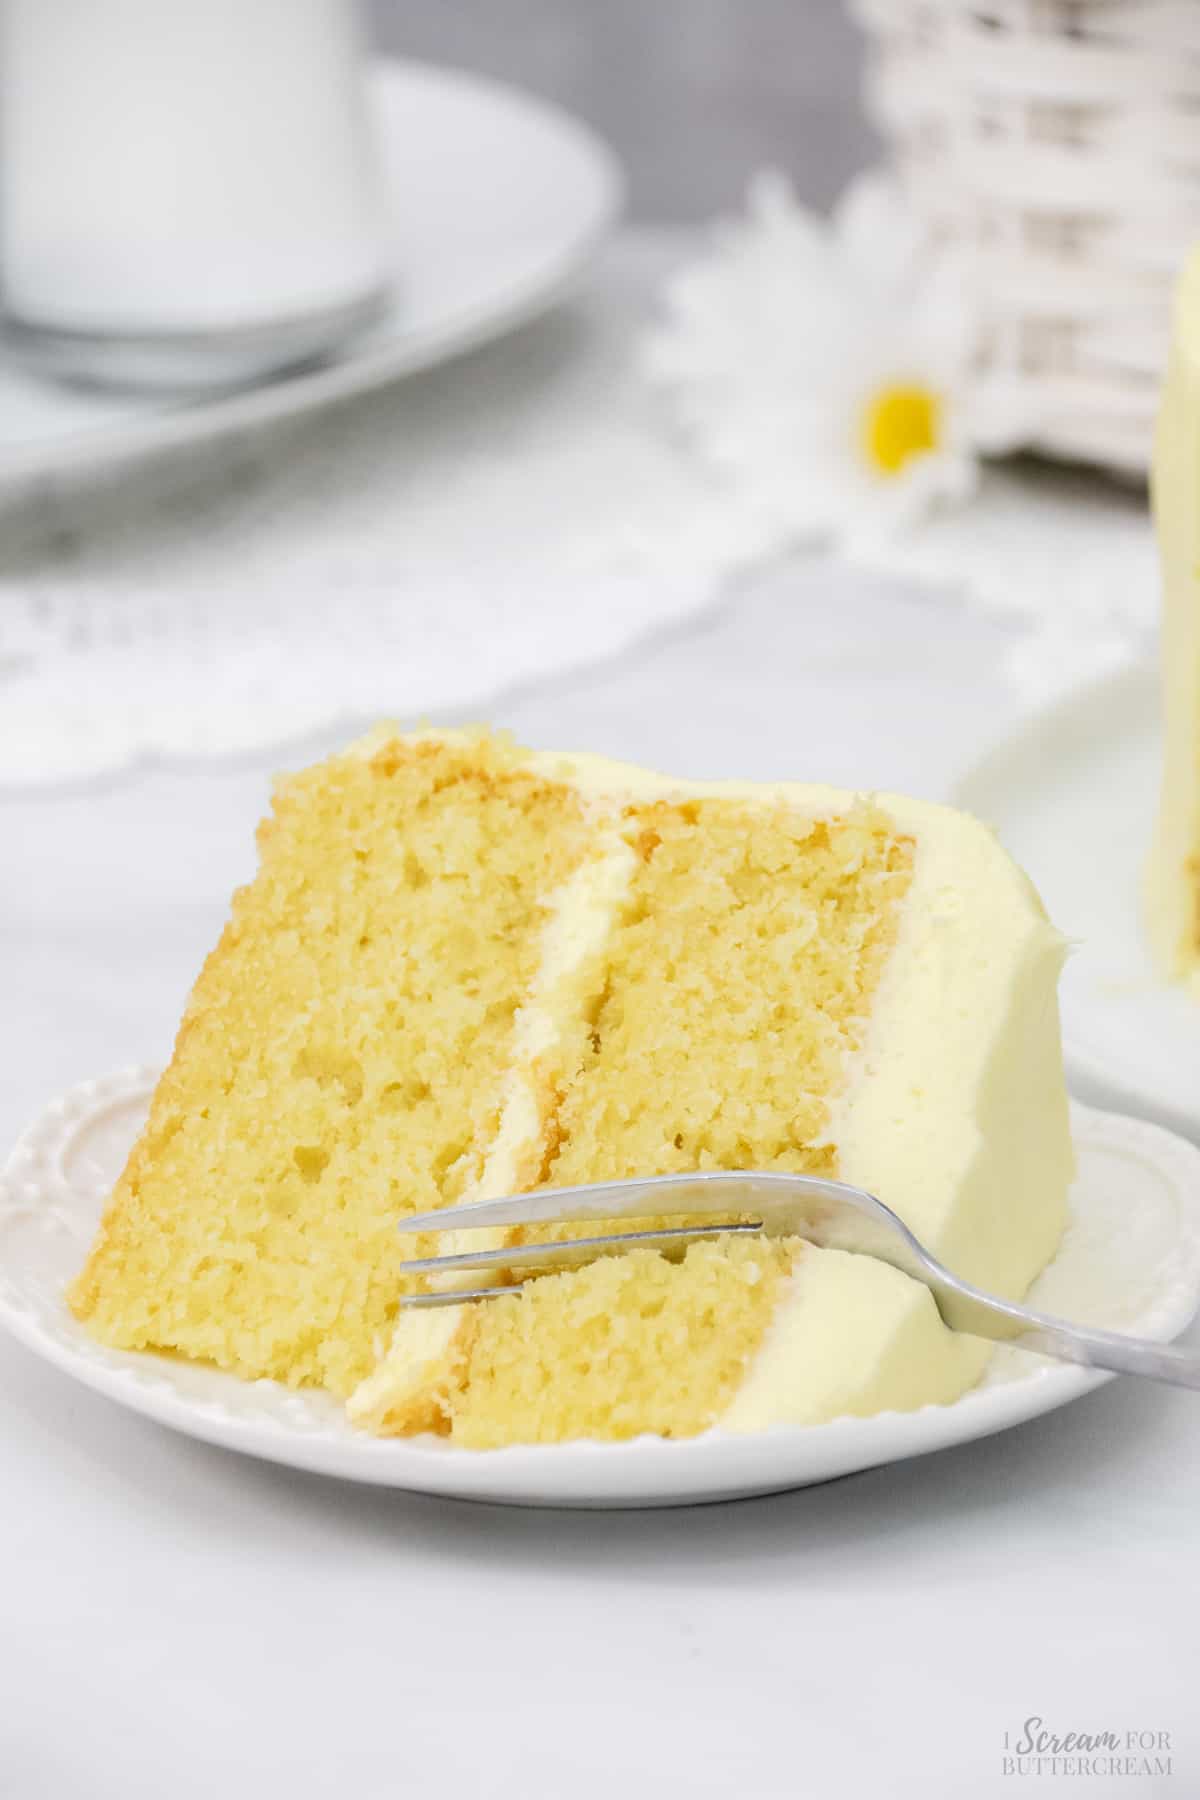 Image of lemon velvet cake with fork on a white plate and white background.